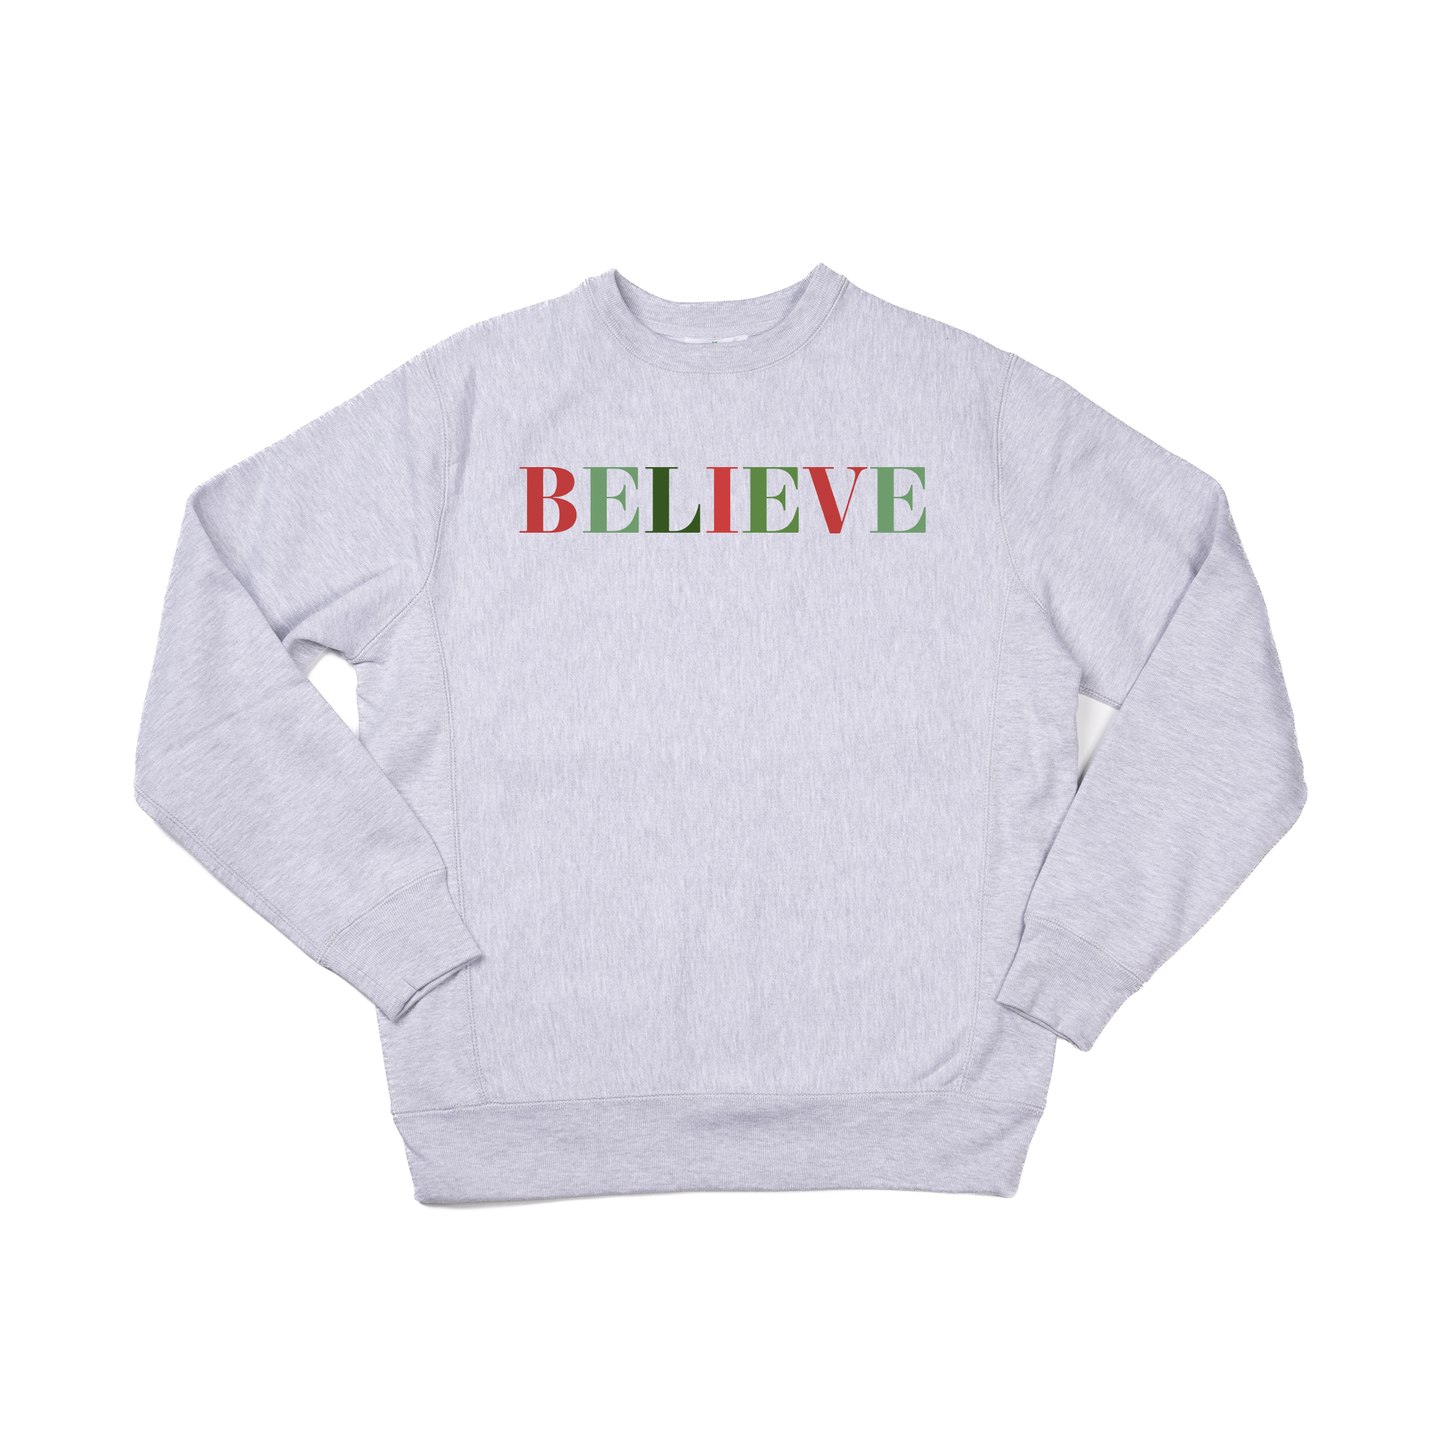 BELIEVE (Multi Color) - Heavyweight Sweatshirt (Heather Gray)